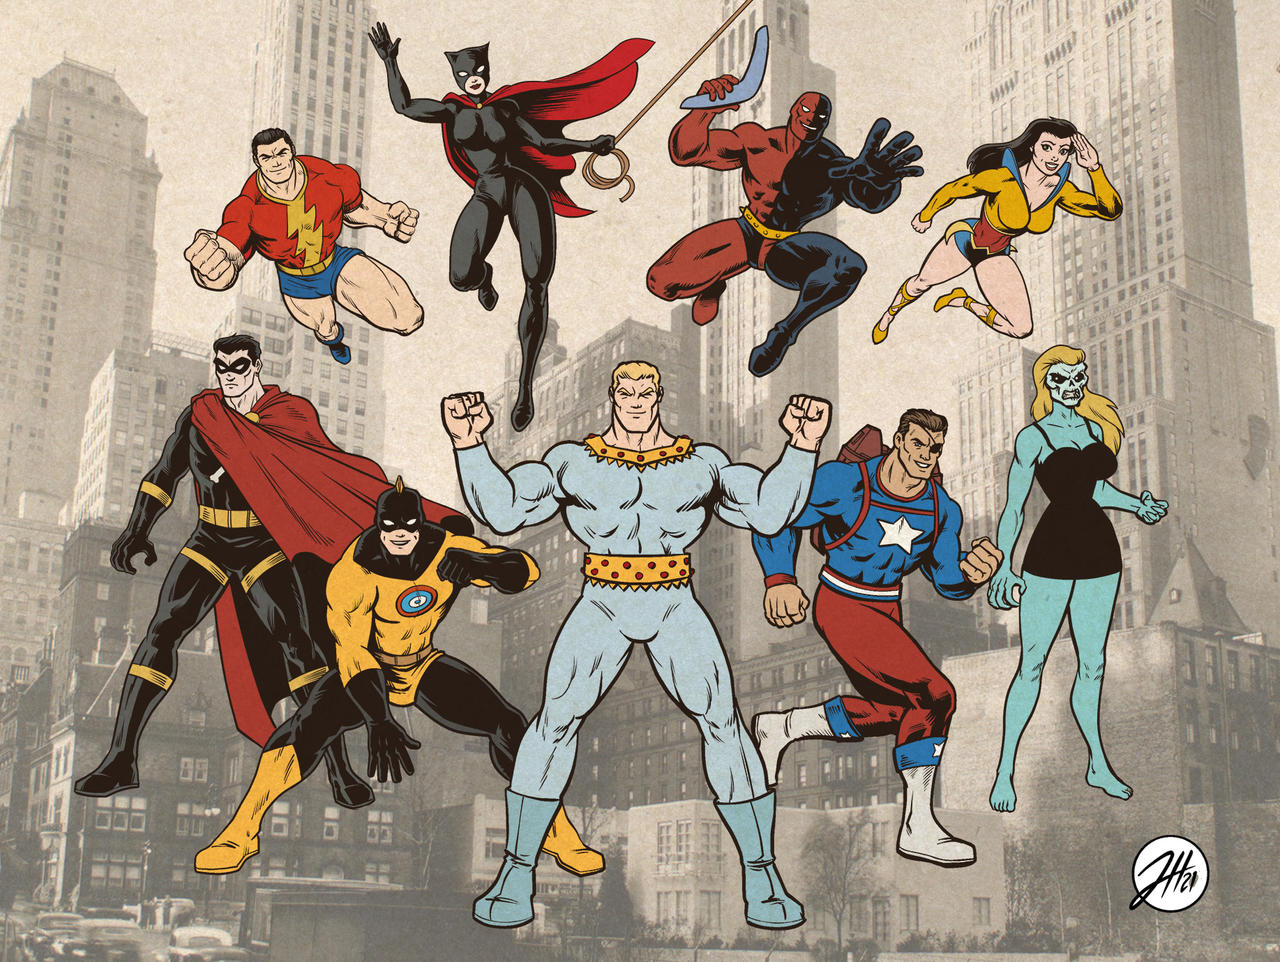 Rake, Public Domain Super Heroes